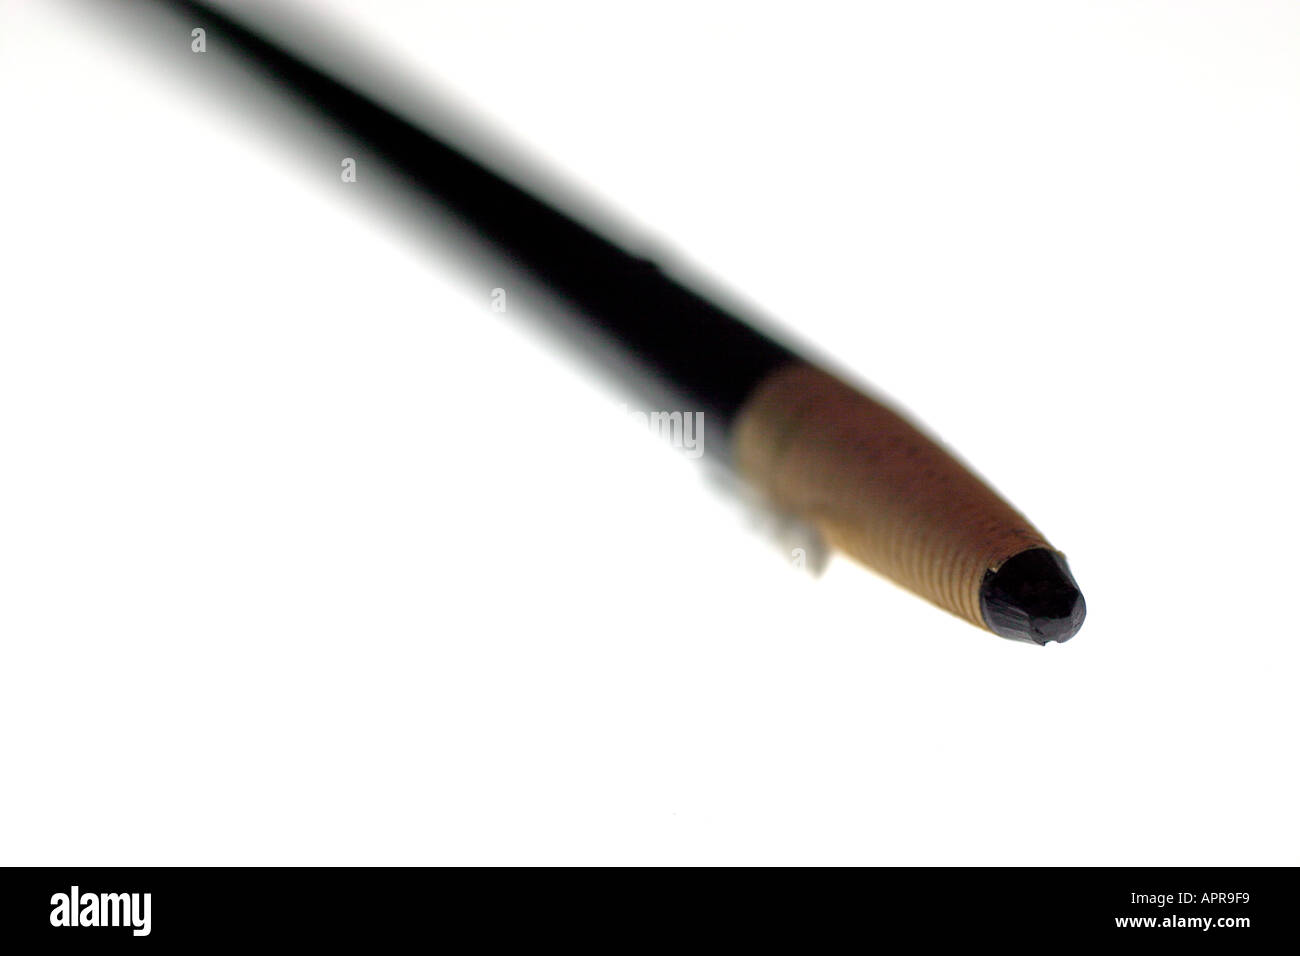 White Grease Pencil Grease Pencil Black Wax Pencils China Markers